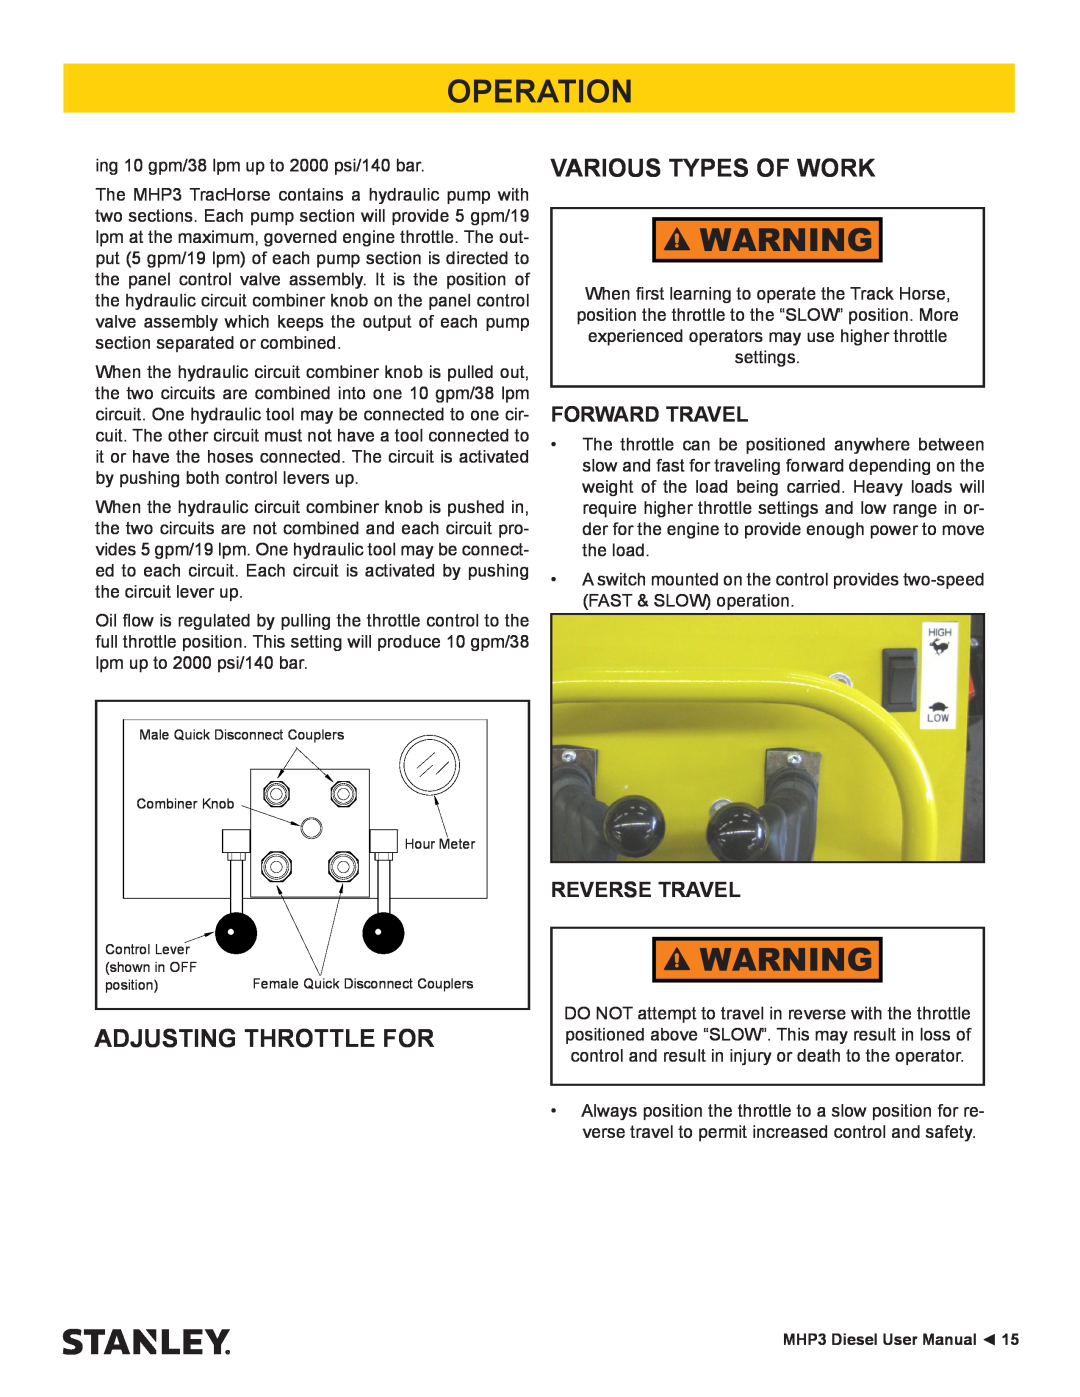 Stanley Black & Decker MHP3 manual Adjusting Throttle For, Various Types Of Work, Forward Travel, Reverse Travel, Operation 